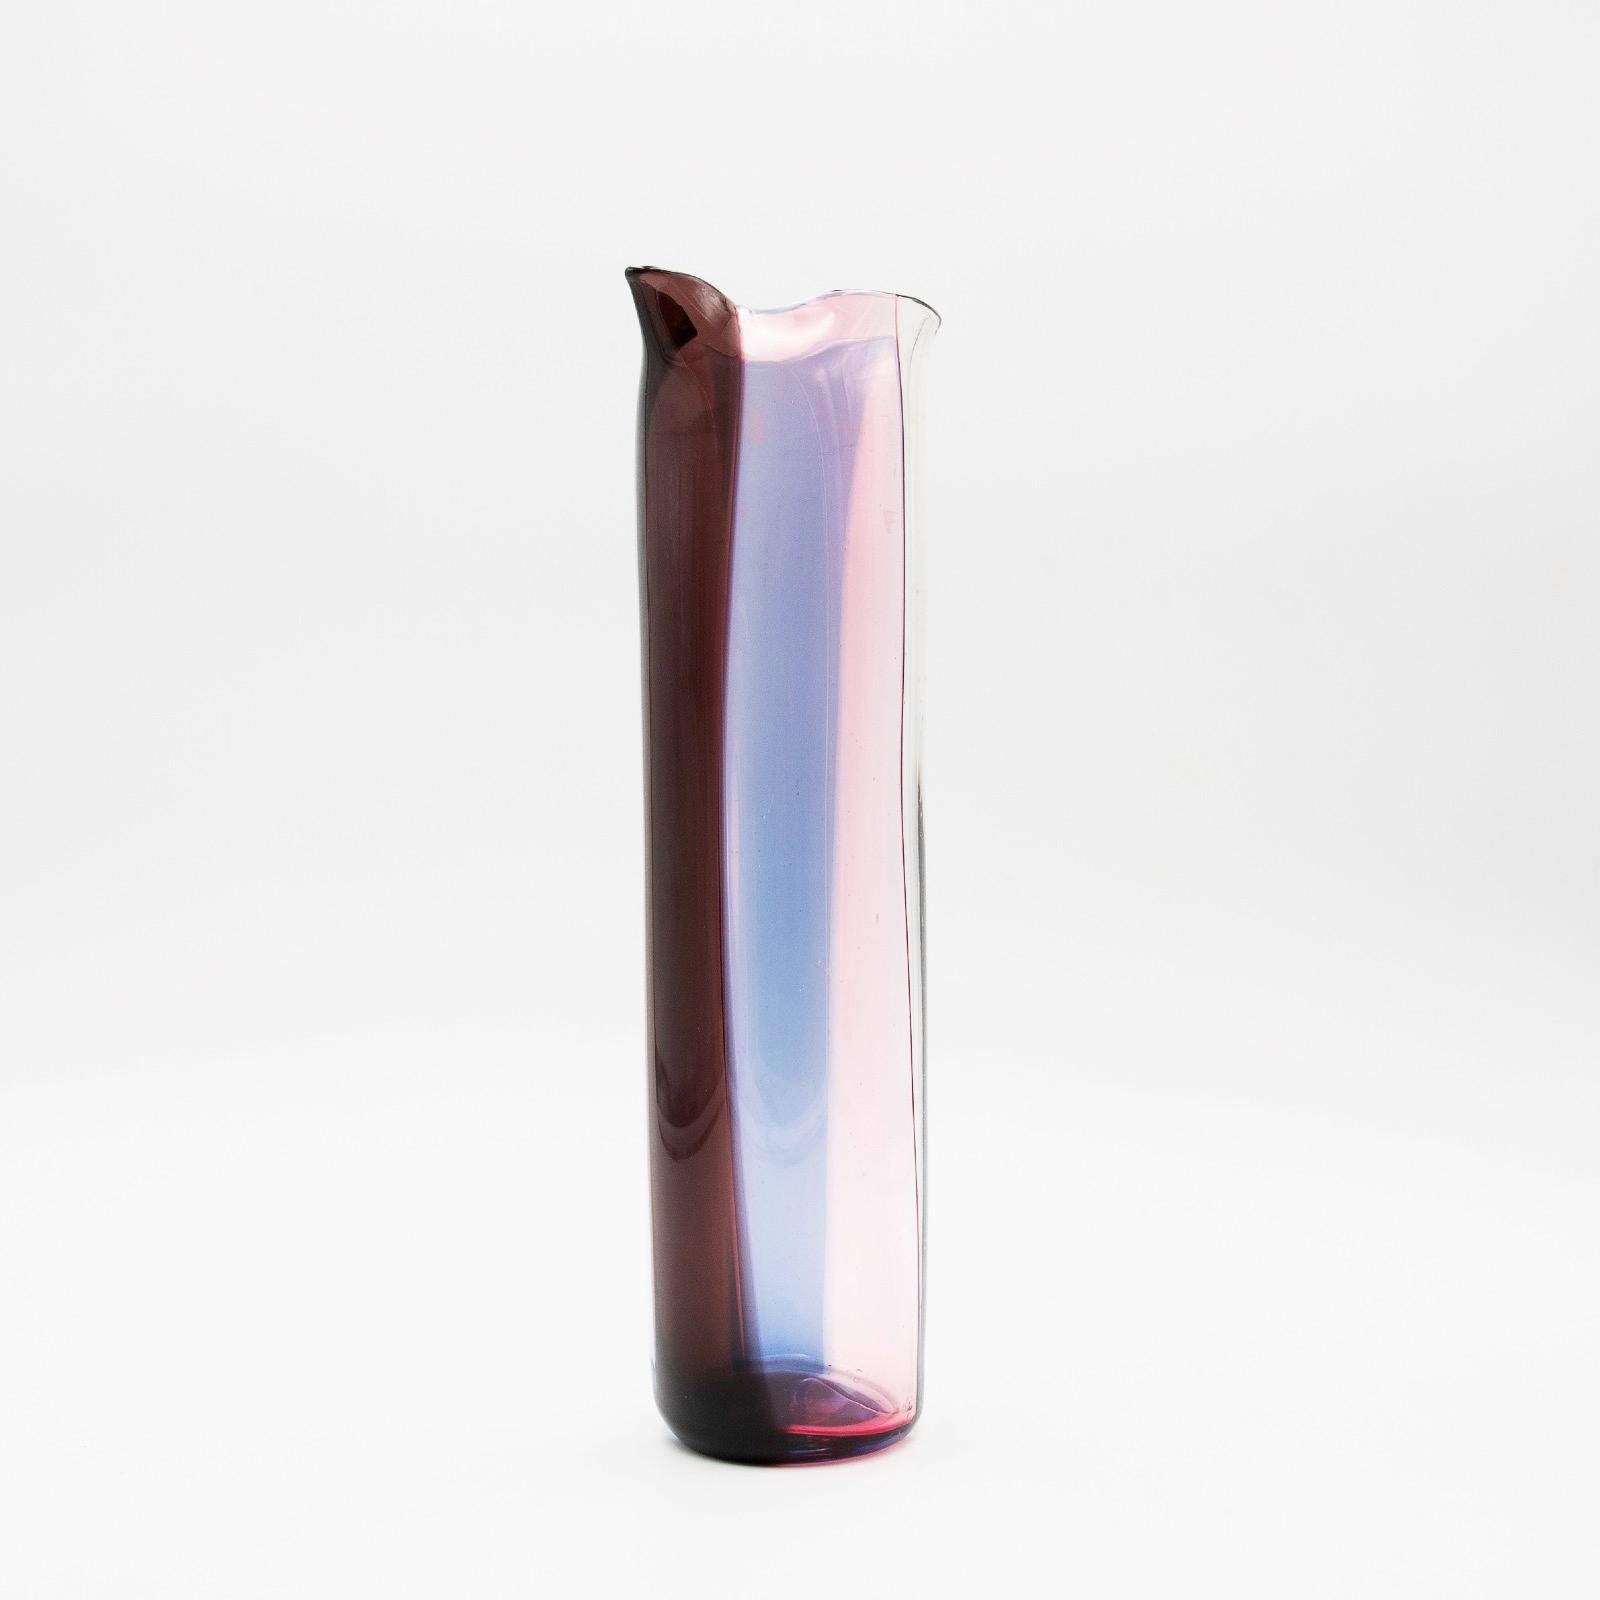 A beautiful glass pitcher in 